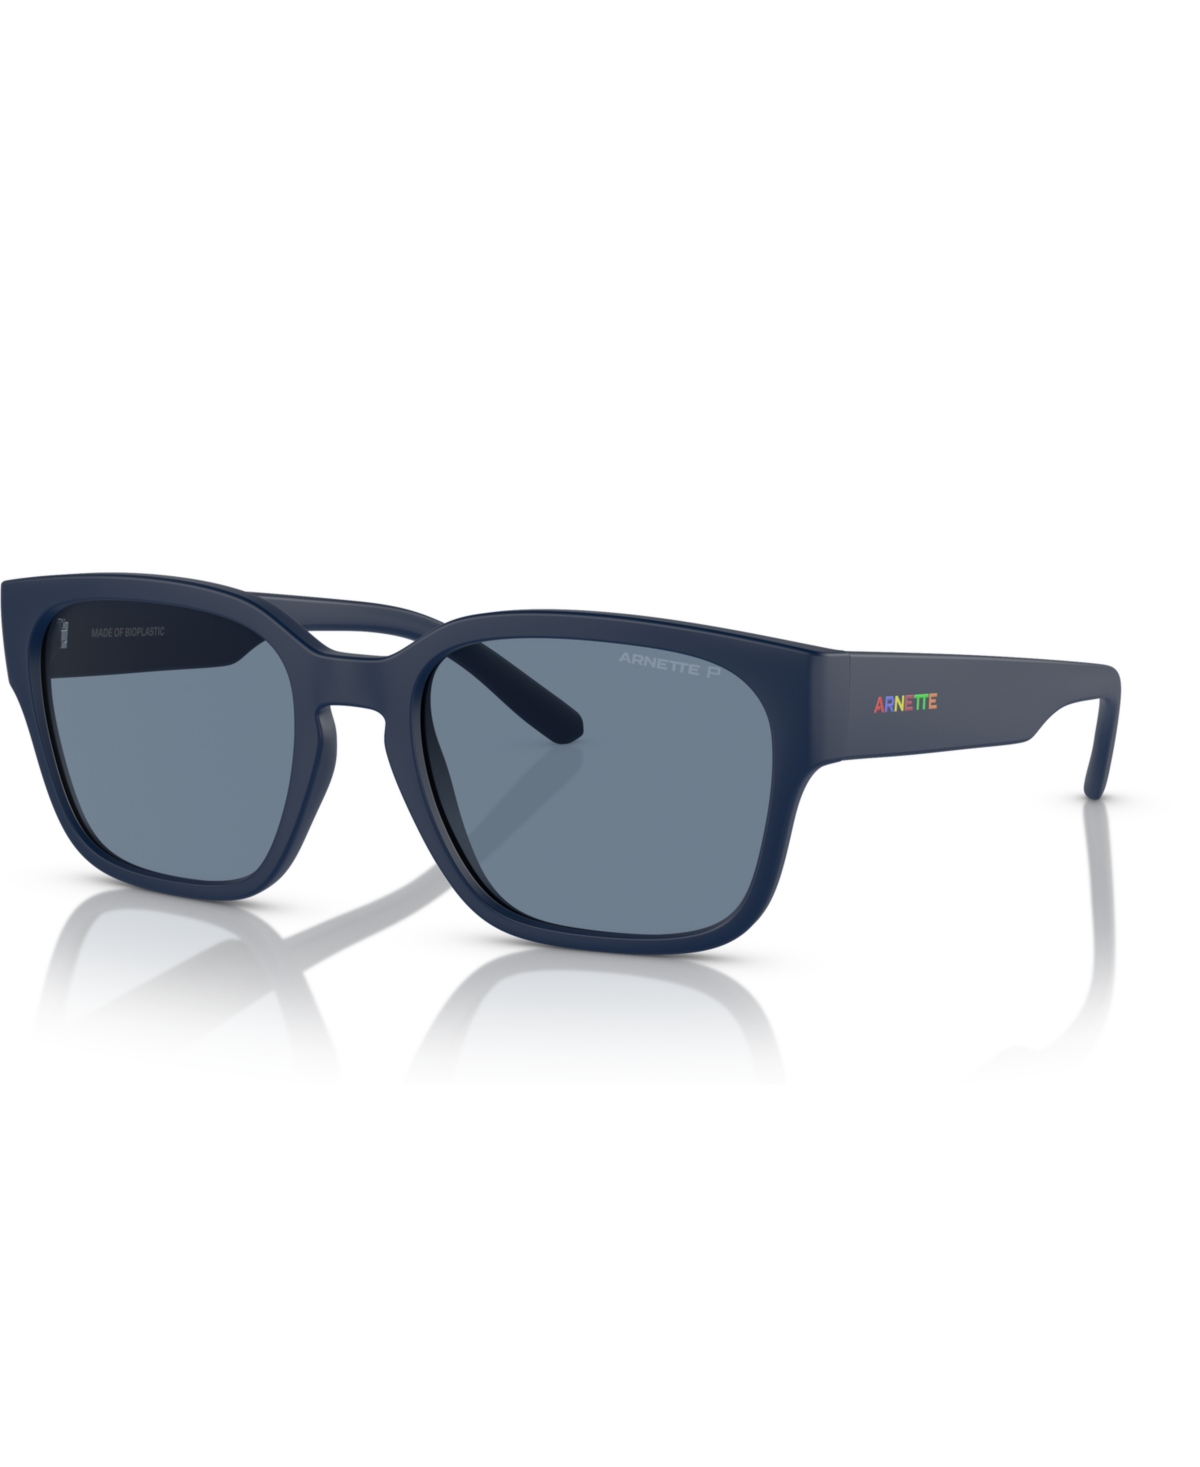 Men's Hamie Polarized Sunglasses, AN4325 - Matte Dark Blue